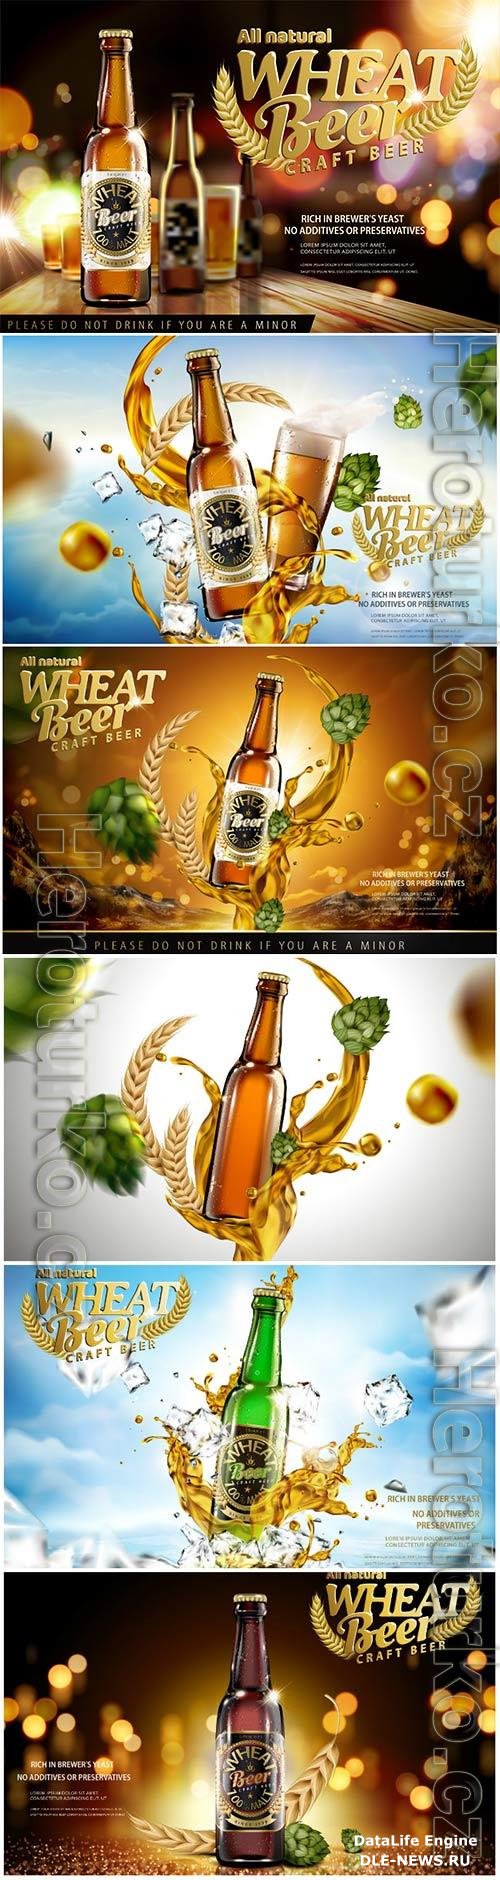 Beer advertising posters in vector